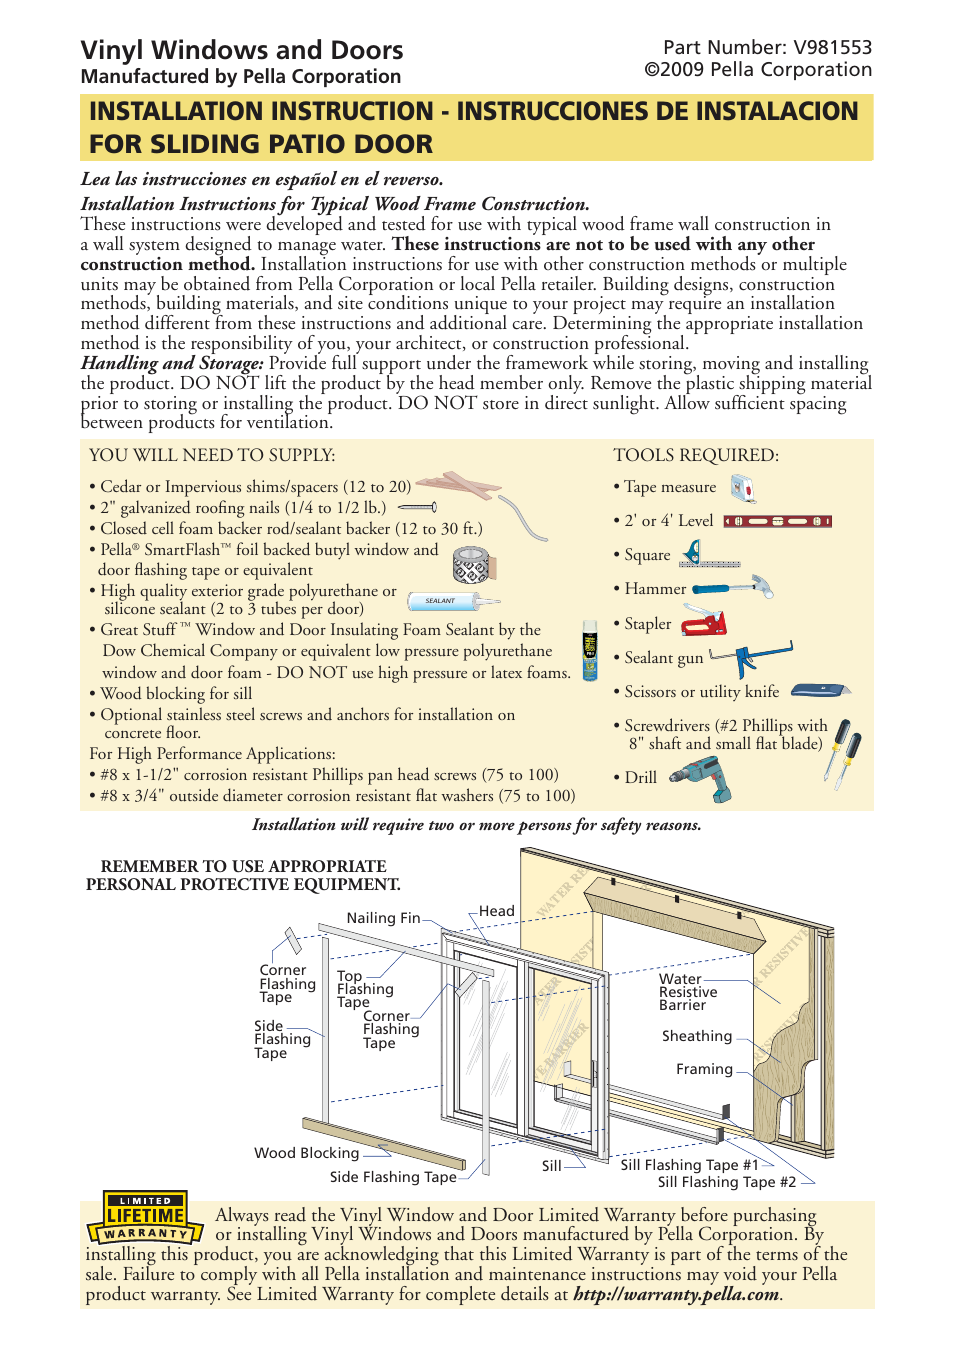 Pella Sliding Patio Door V981553 User Manual 9 pages